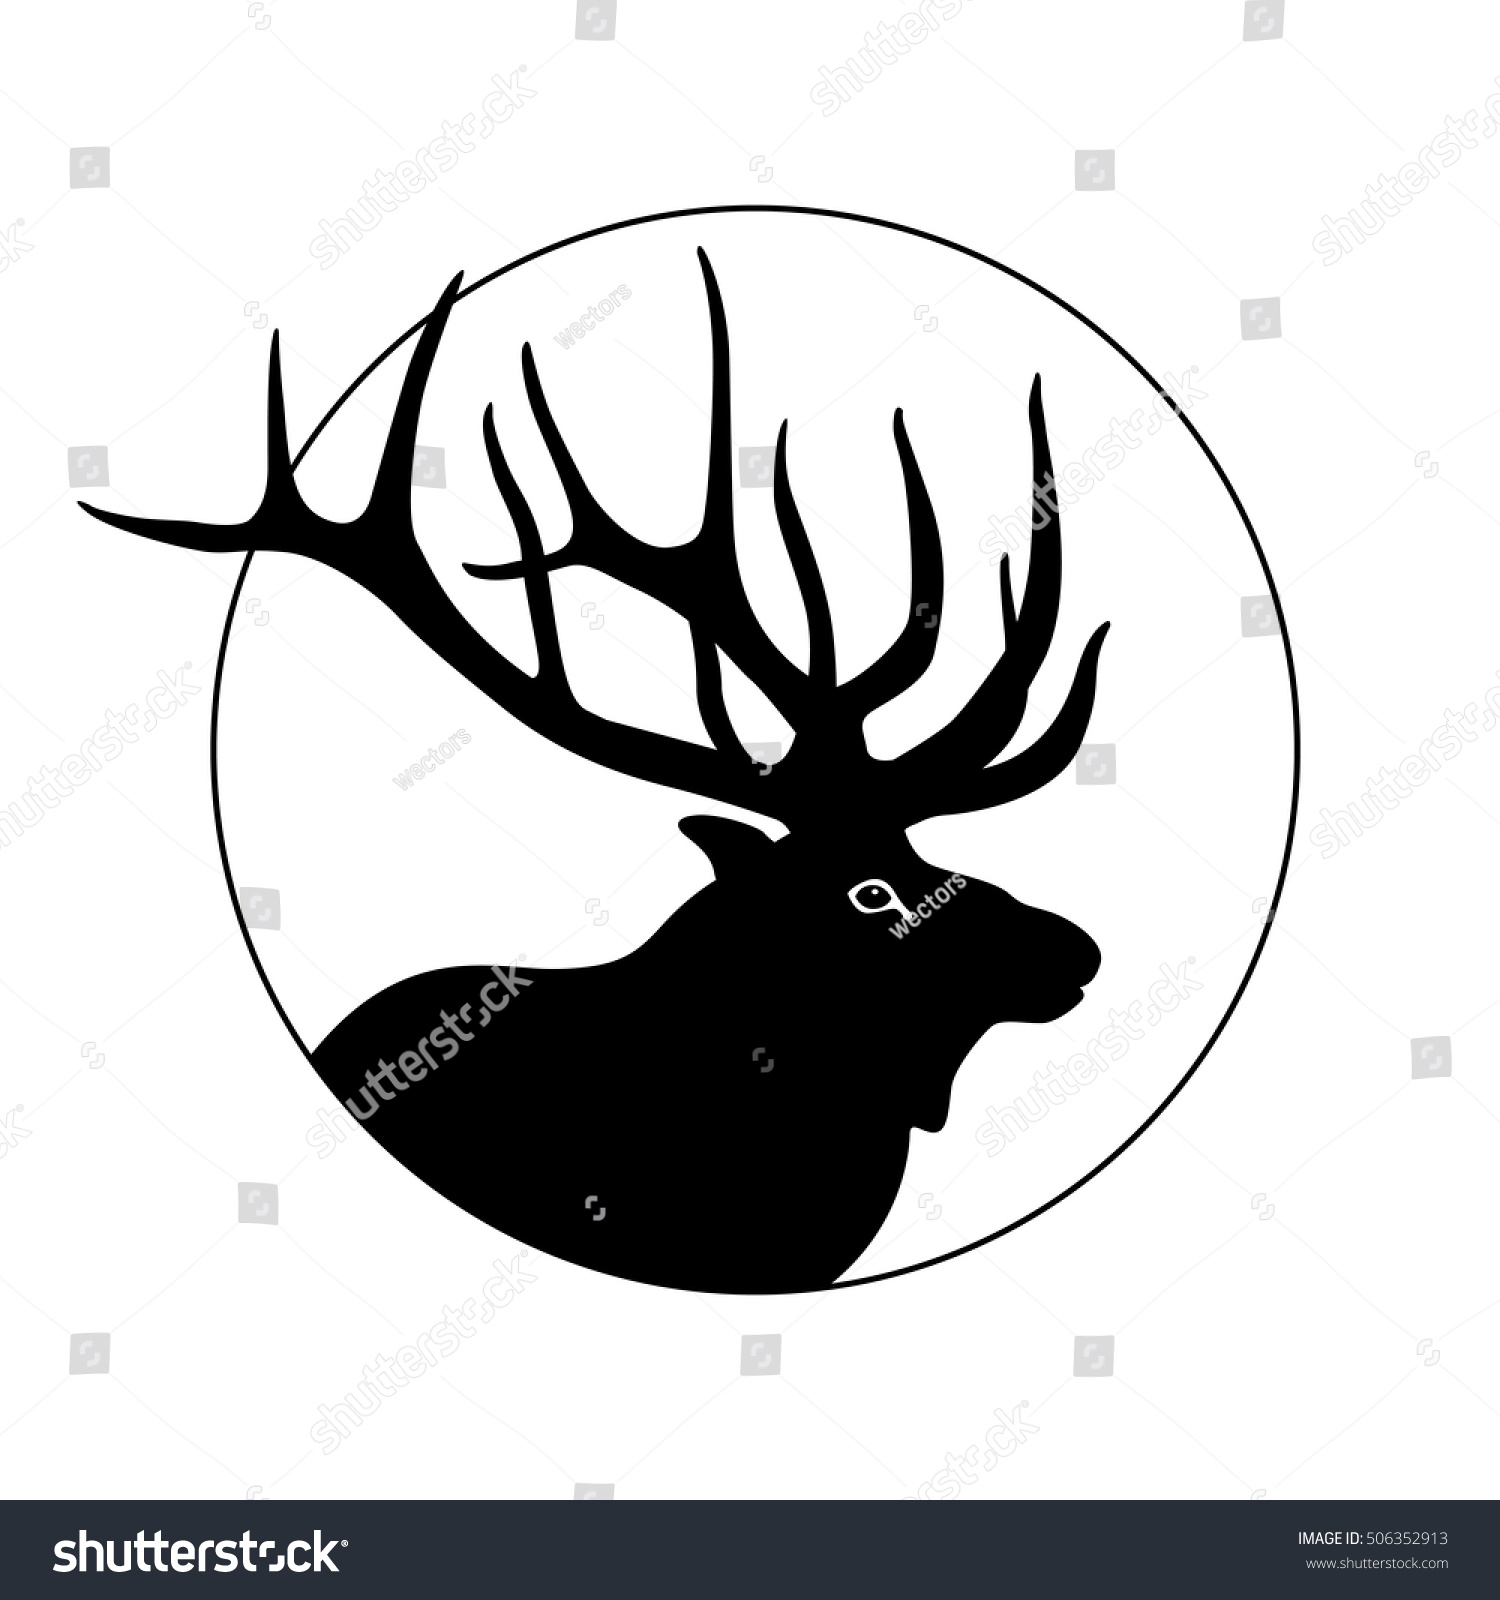 Deer Head Vector Illustration Black Silhouette - 506352913 : Shutterstock